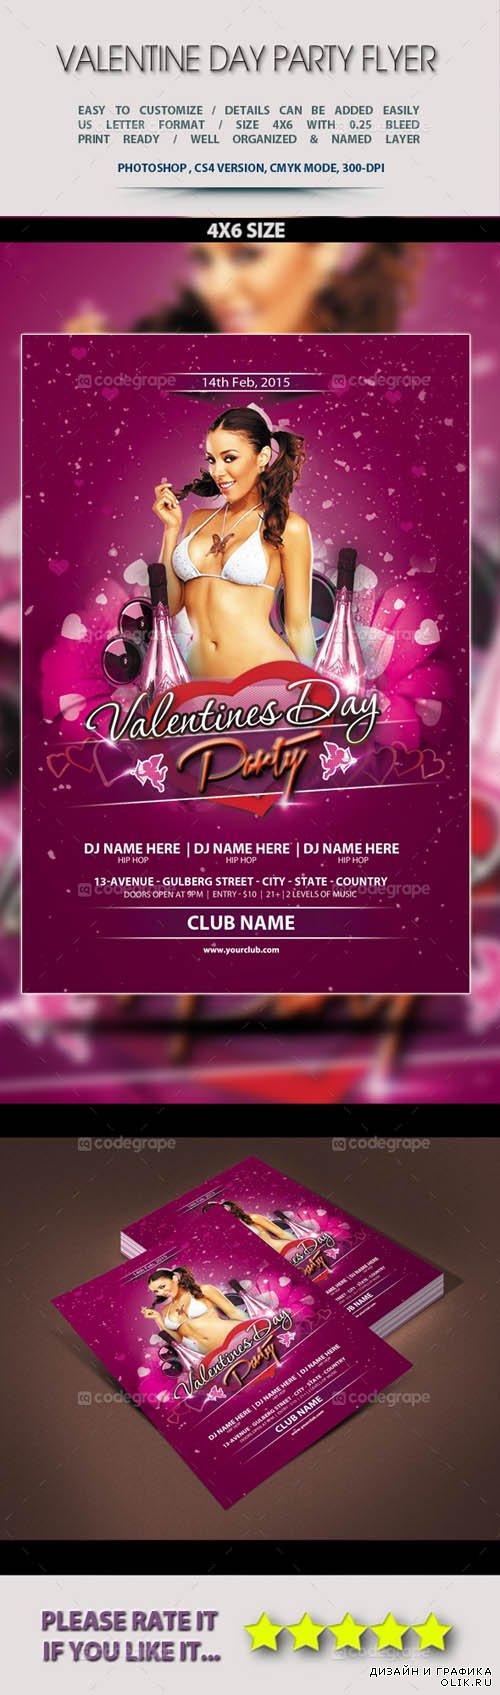 PSD - Valentine Day Party Flyer